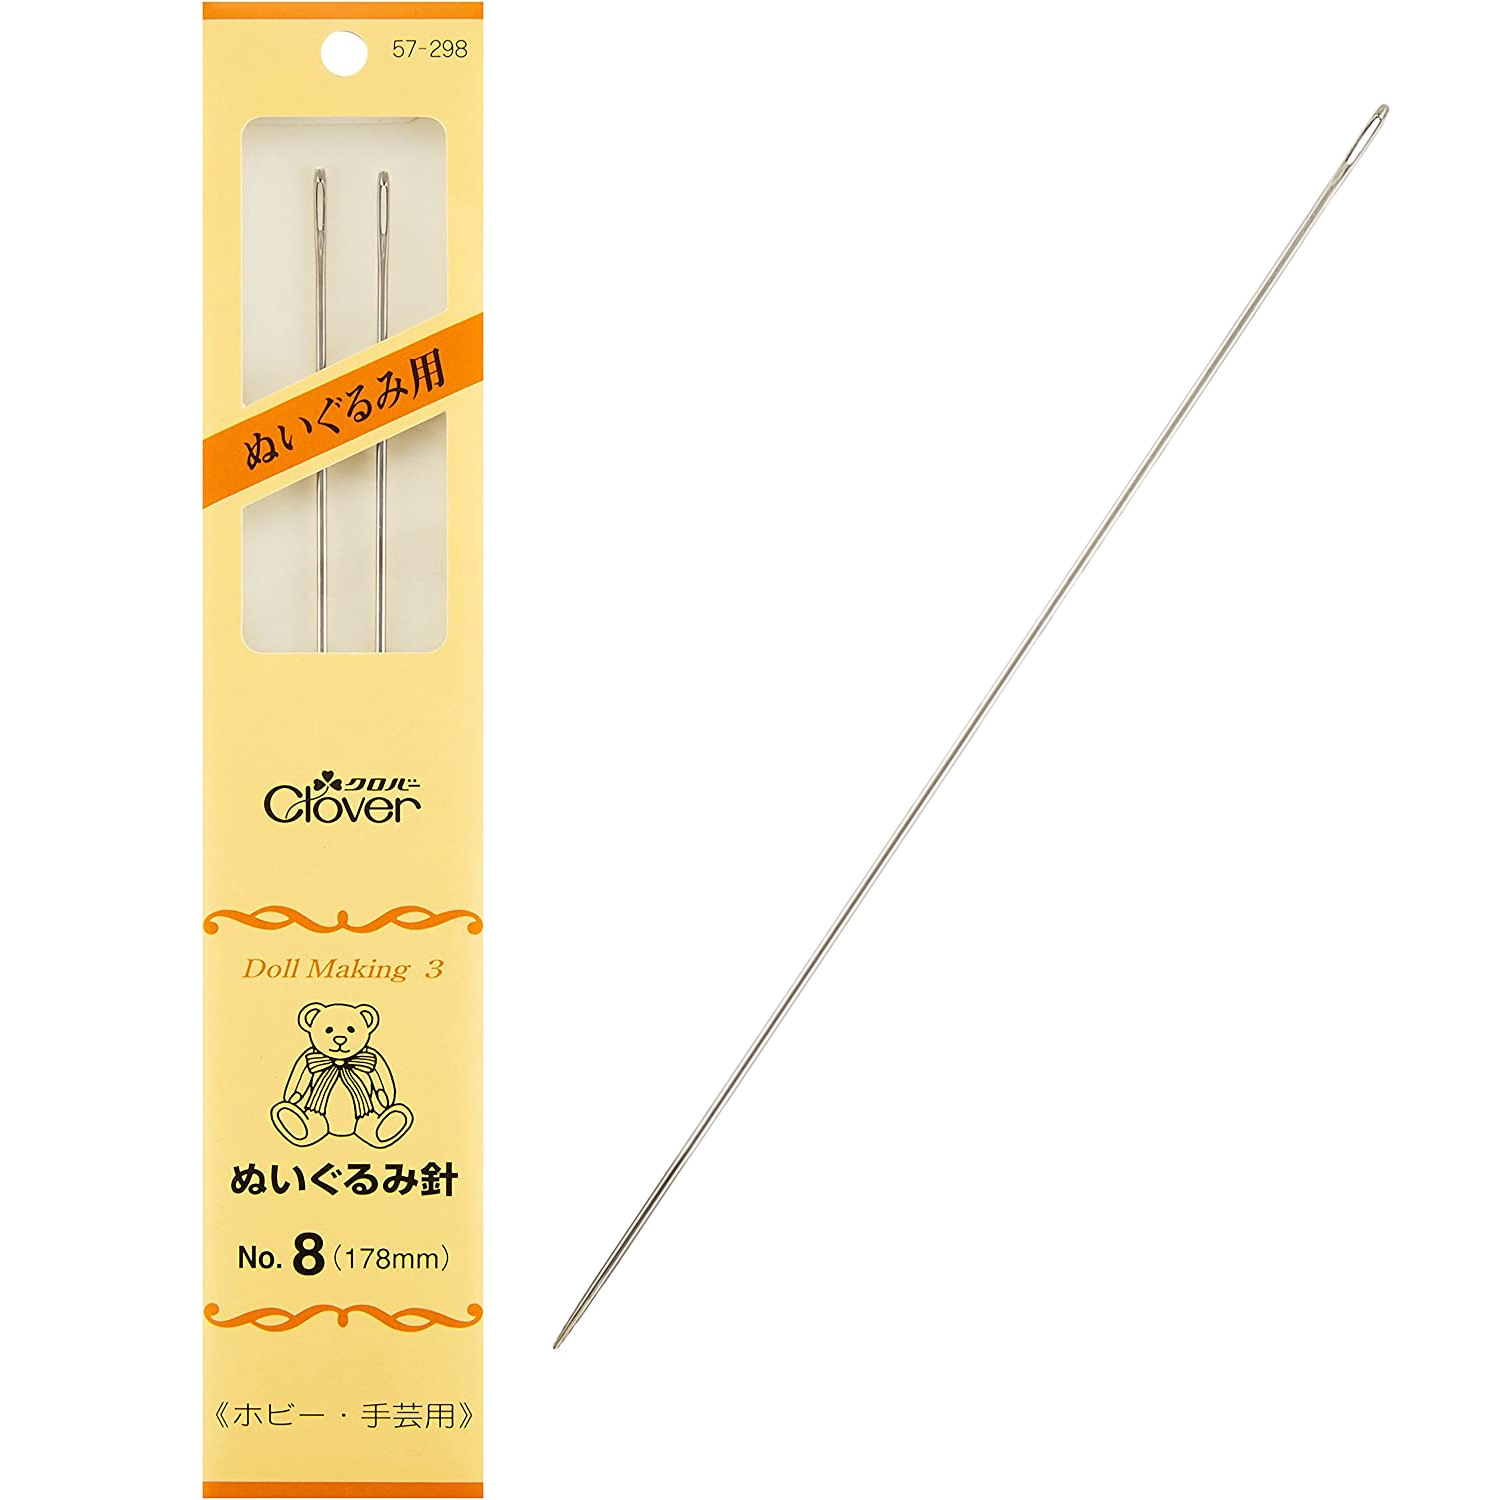 CL57-298 Plush Toy Needles No.8(178mm) (pcs)